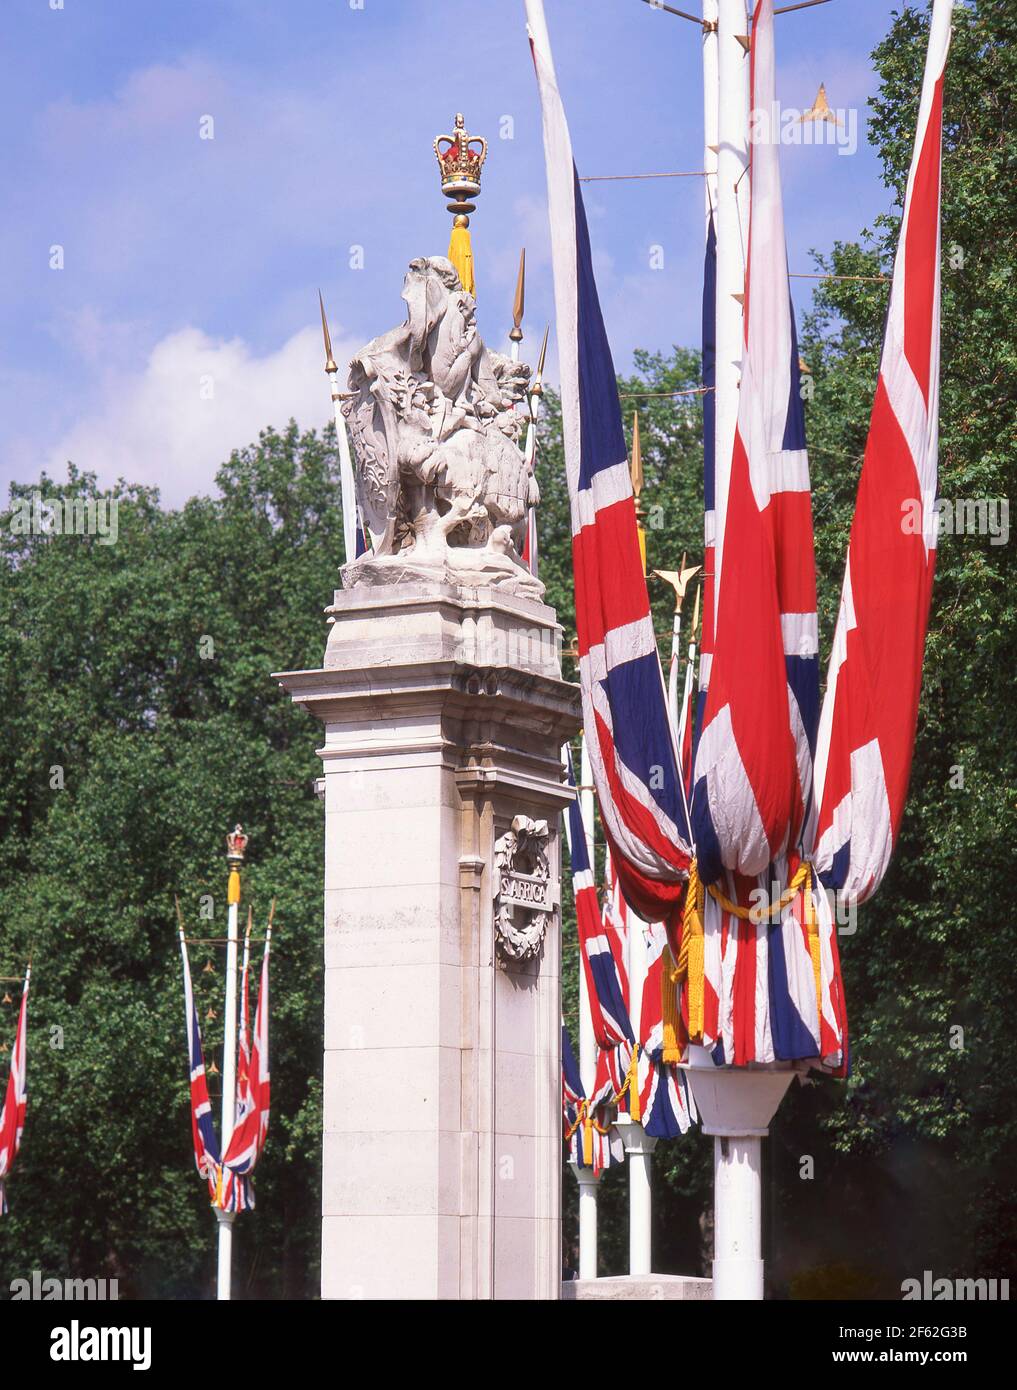 Dekorative königliche Flaggen an der Stange, Buckingham Palace, The Mall, City of Westminster, Greater London, England, Vereinigtes Königreich Stockfoto